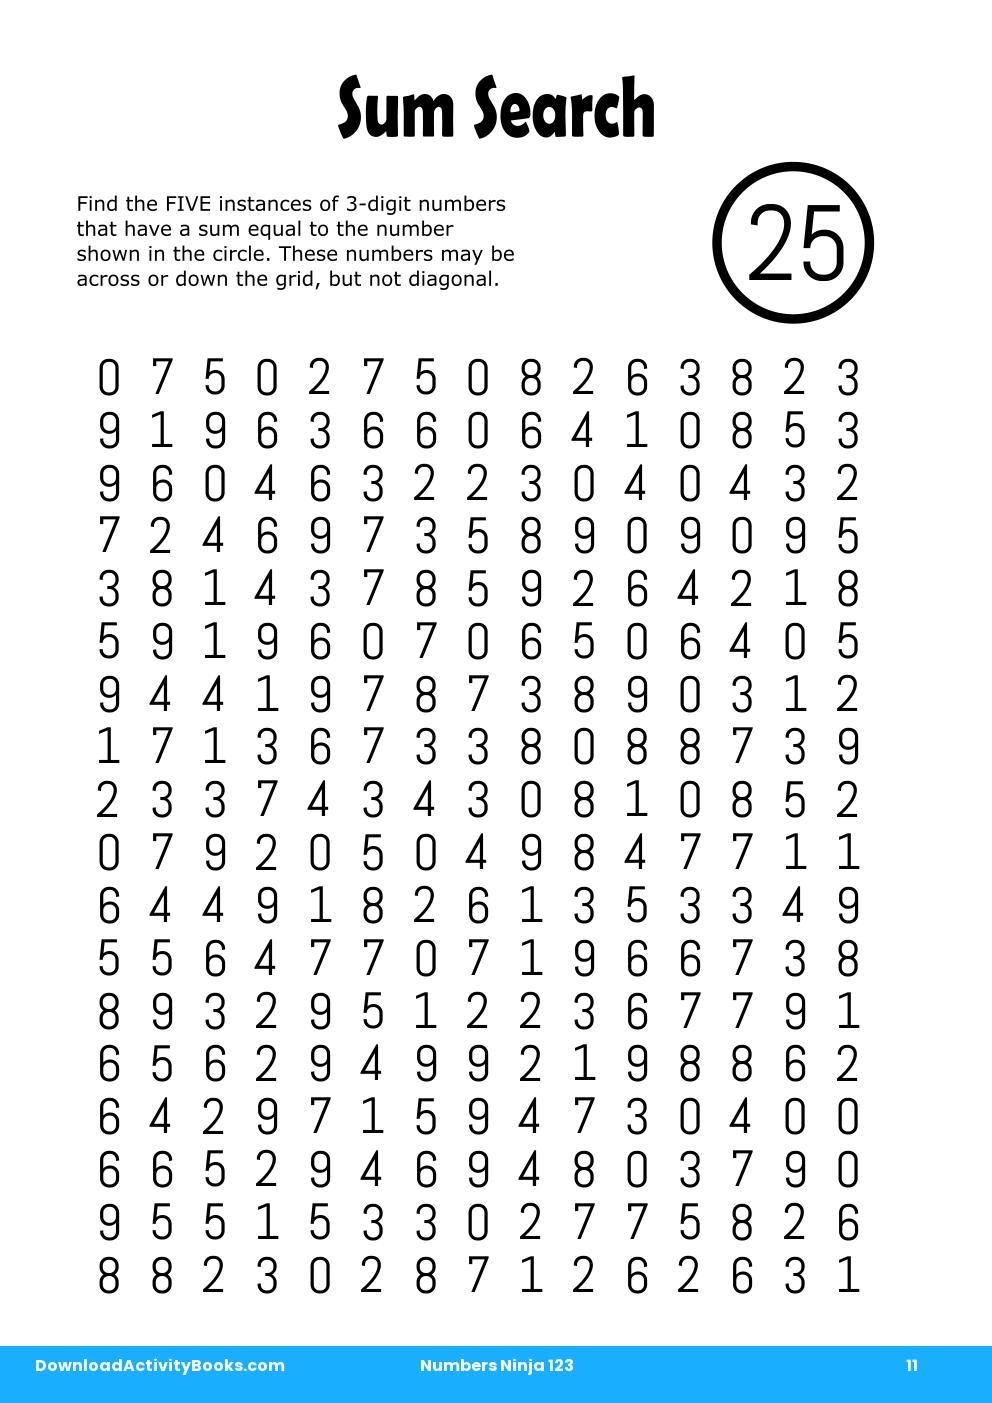 Sum Search in Numbers Ninja 123